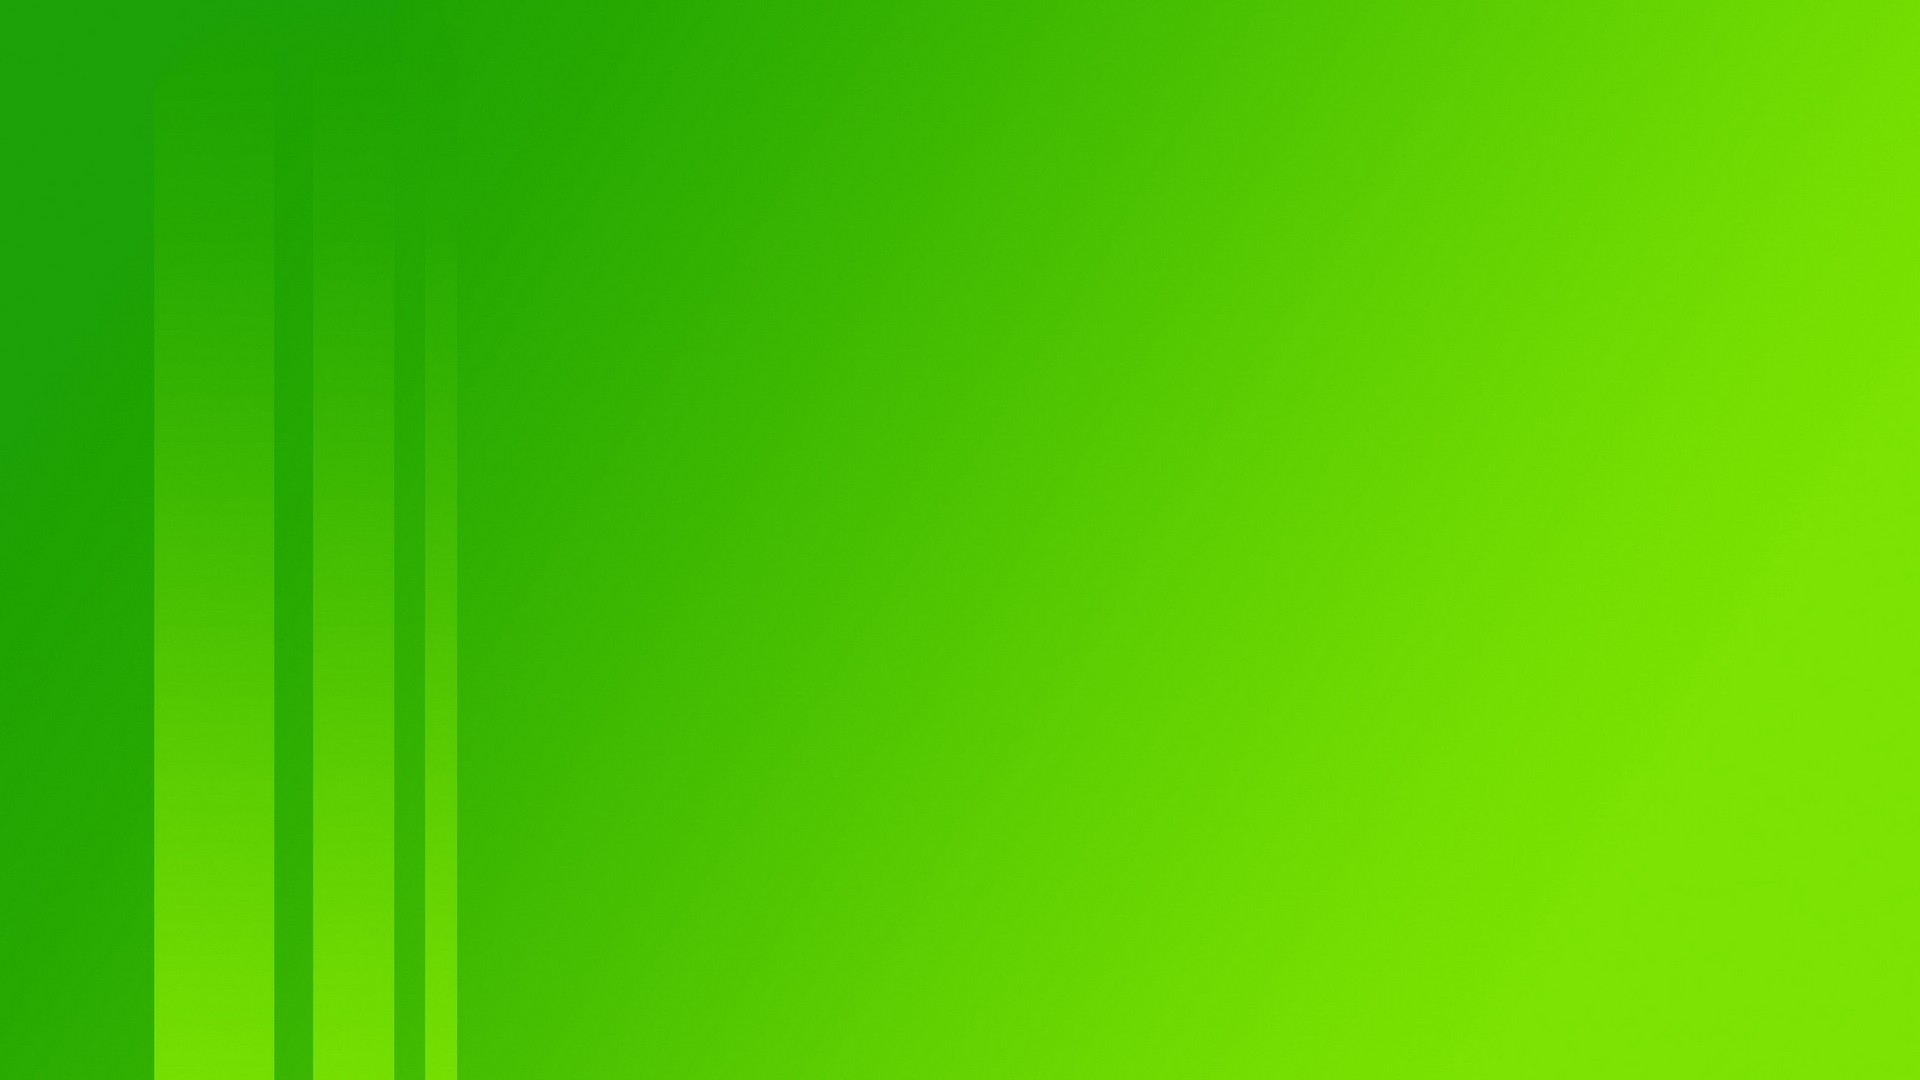 tapete hijau,grün,gelb,blatt,linie,gras